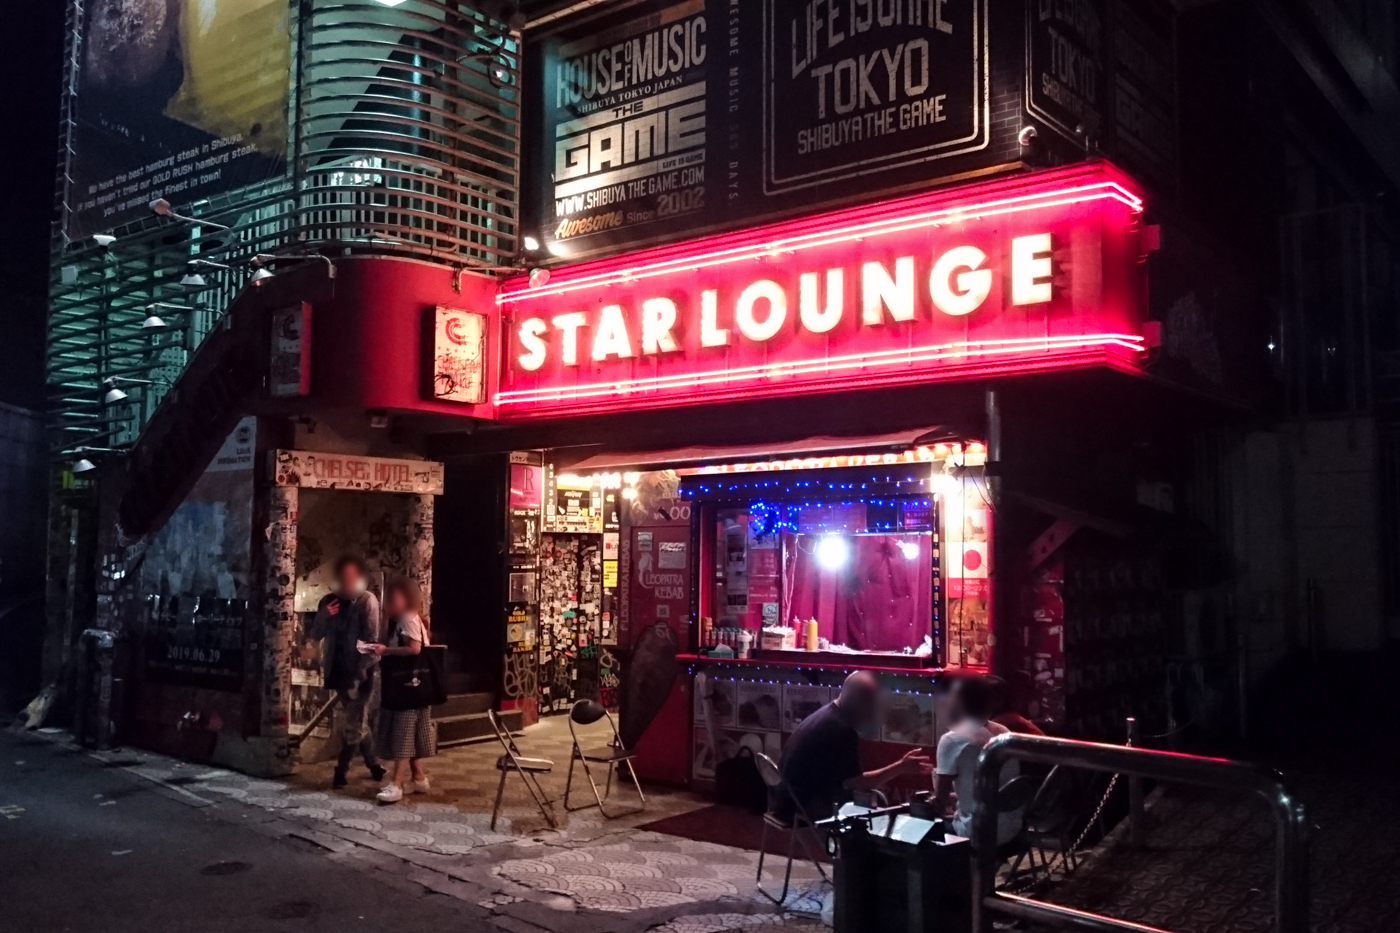 「“Scramble”vol.5」＠渋谷Star lounge